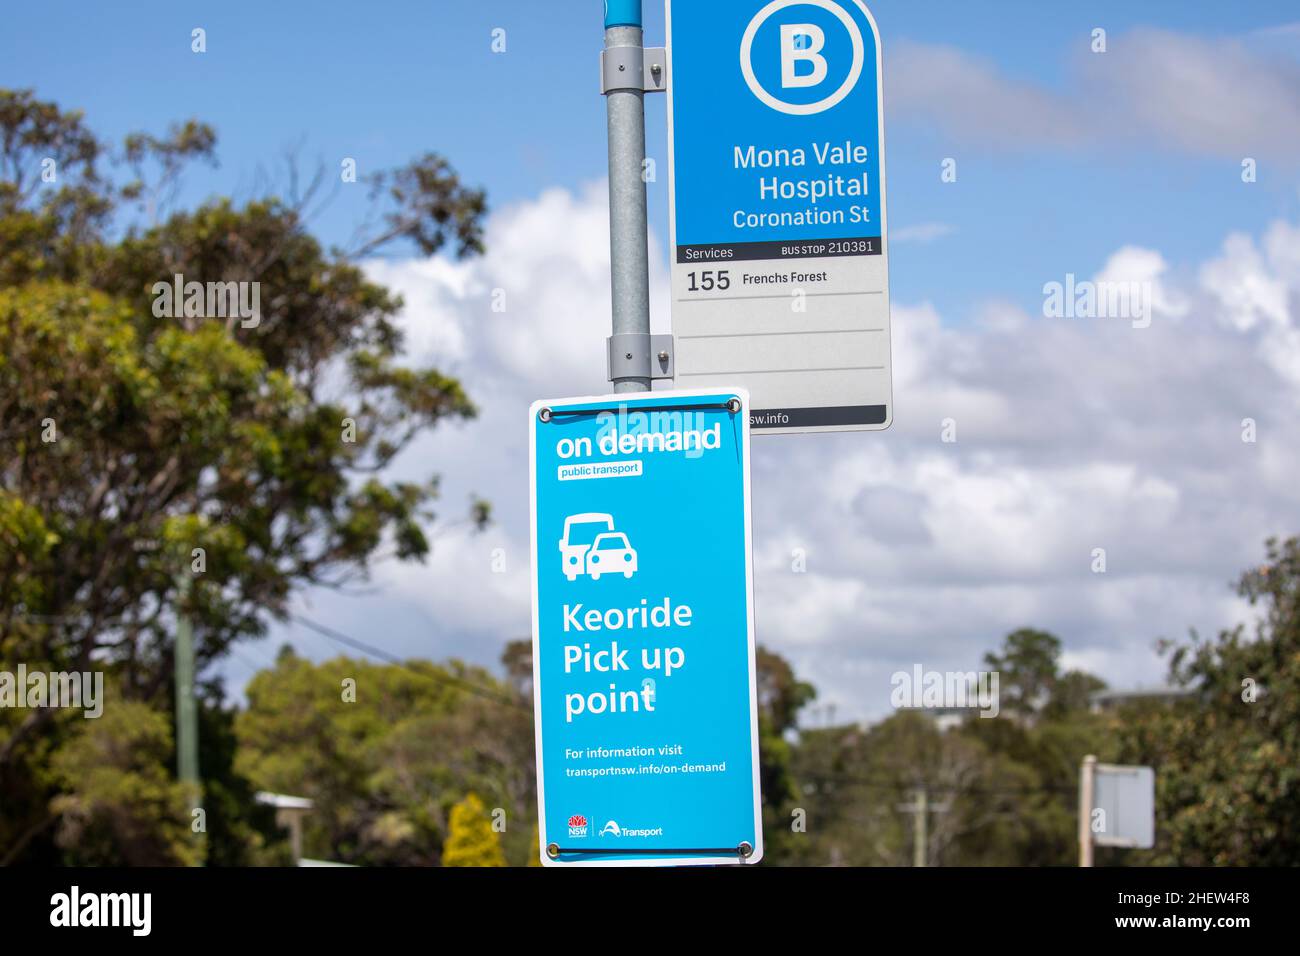 Pick up point for Keoride community transport service at Mona Vale Hospital in Mona Vale,Sydney,Australia Stock Photo